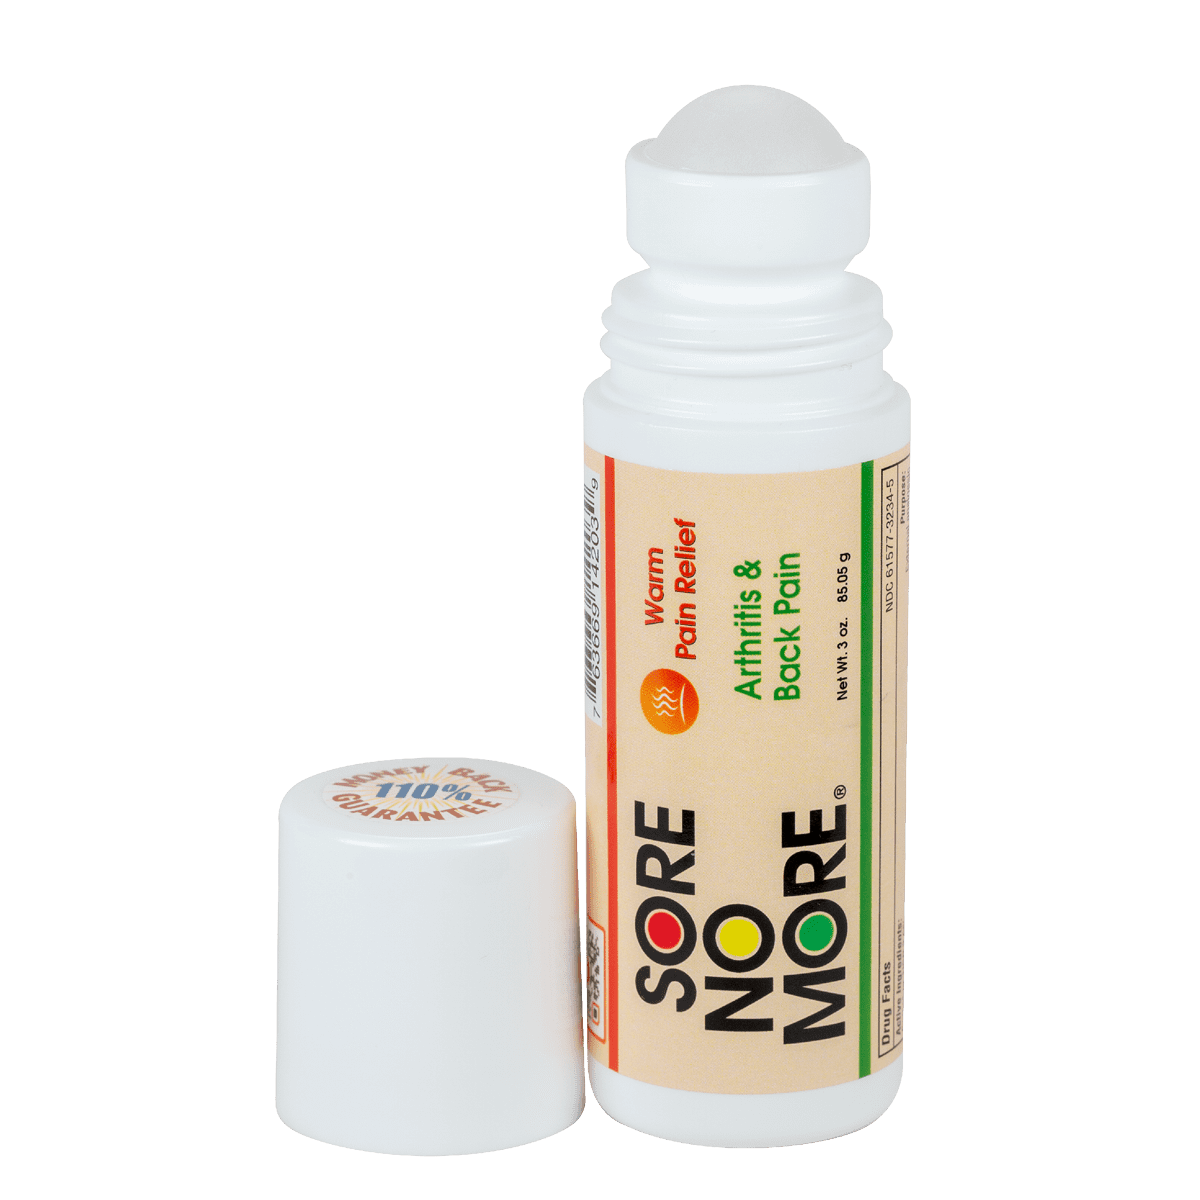 Sore No More® Original Warm Pain Relief Gel – 3 oz Roll-on